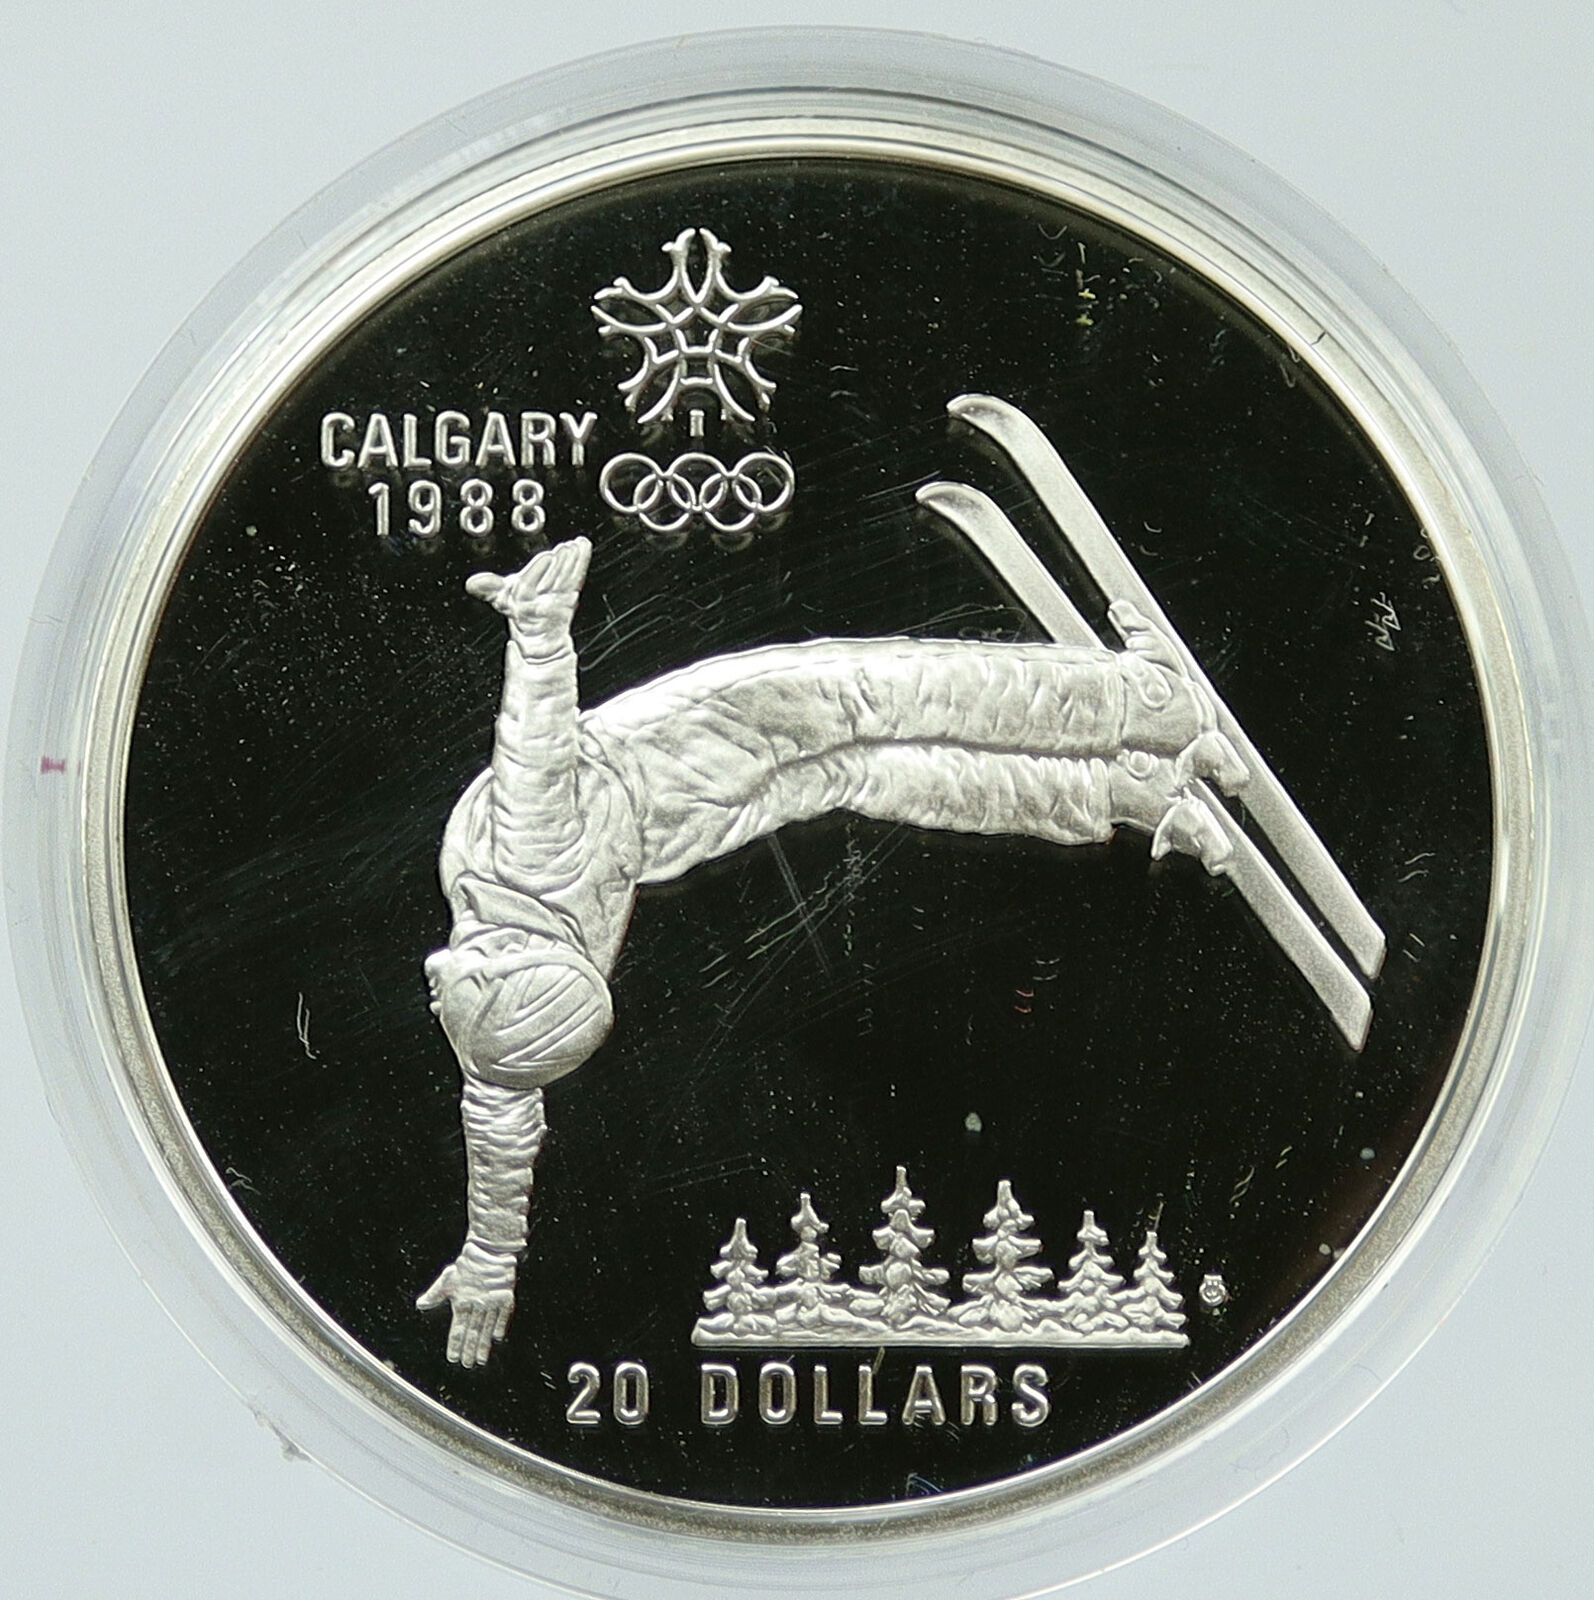 1986 CANADA 1988 CALGARY OLYMPICS Free-X Skiing Proof Silver $20 Coin i117462